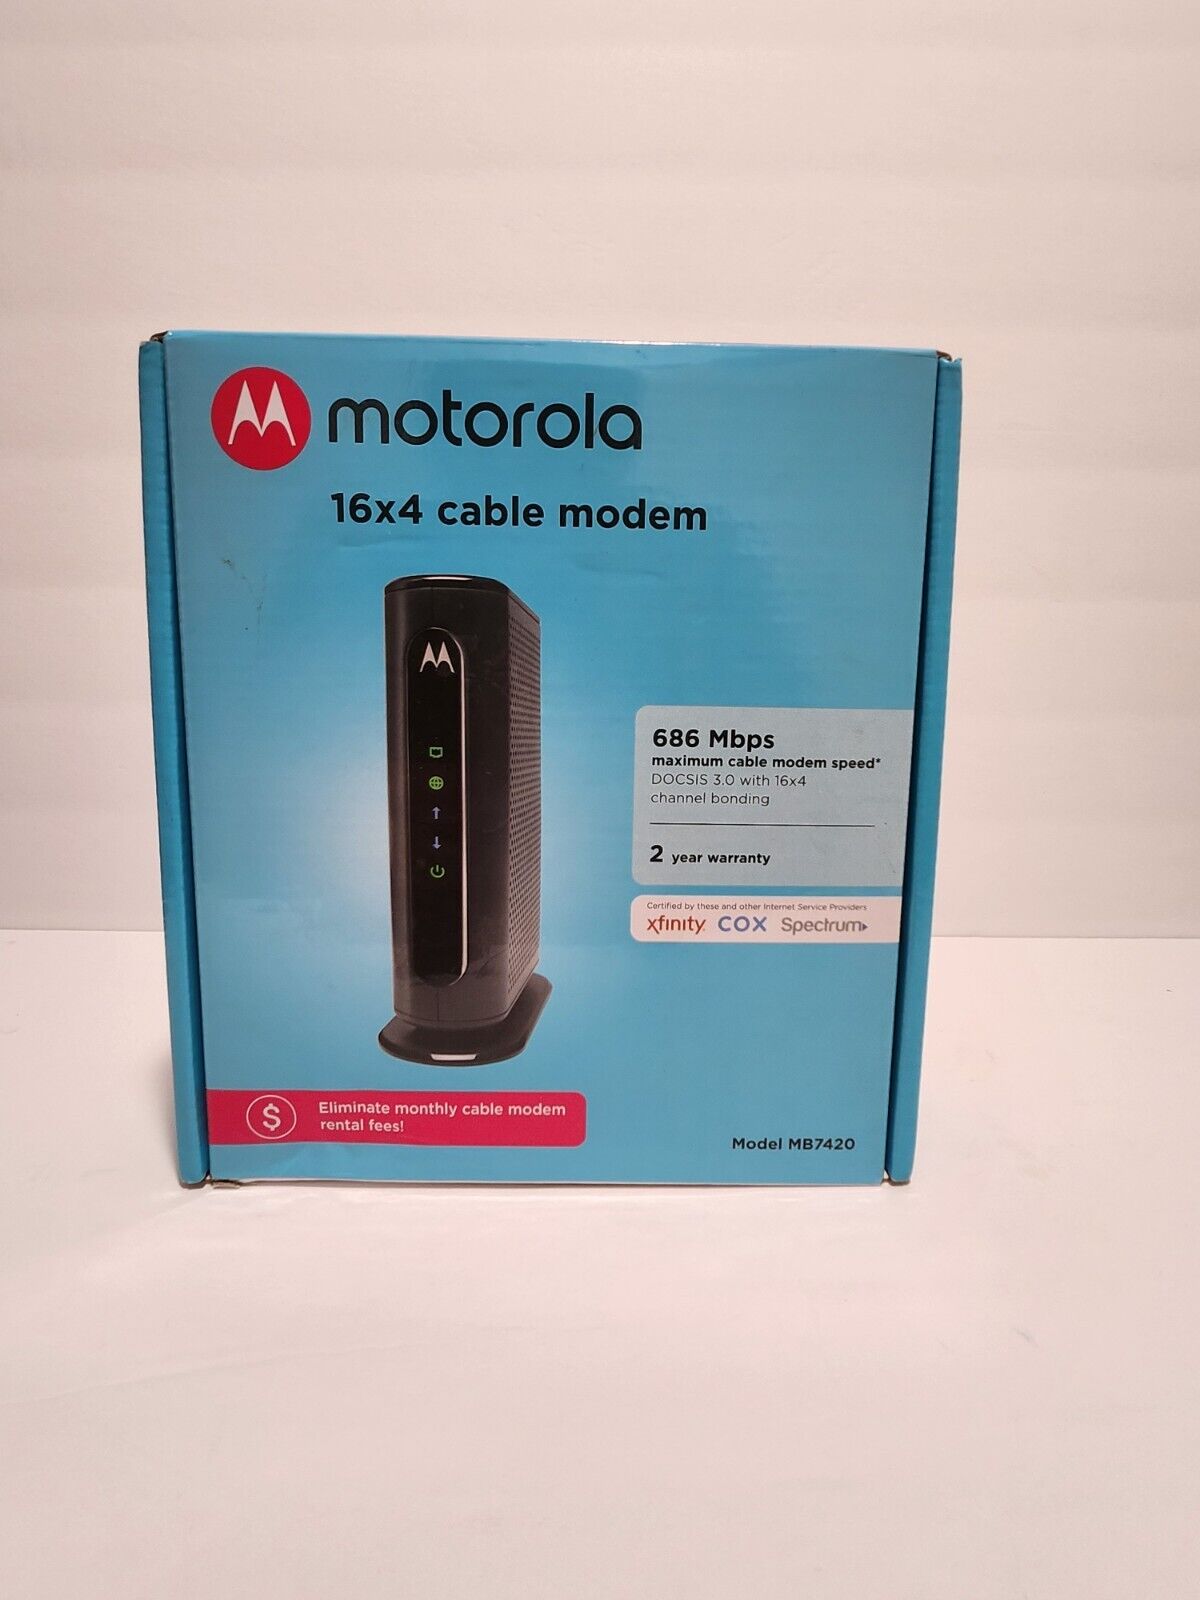 Motorola 16X4 Cable Modem Model MB7420, 686 Mbps New Open Box